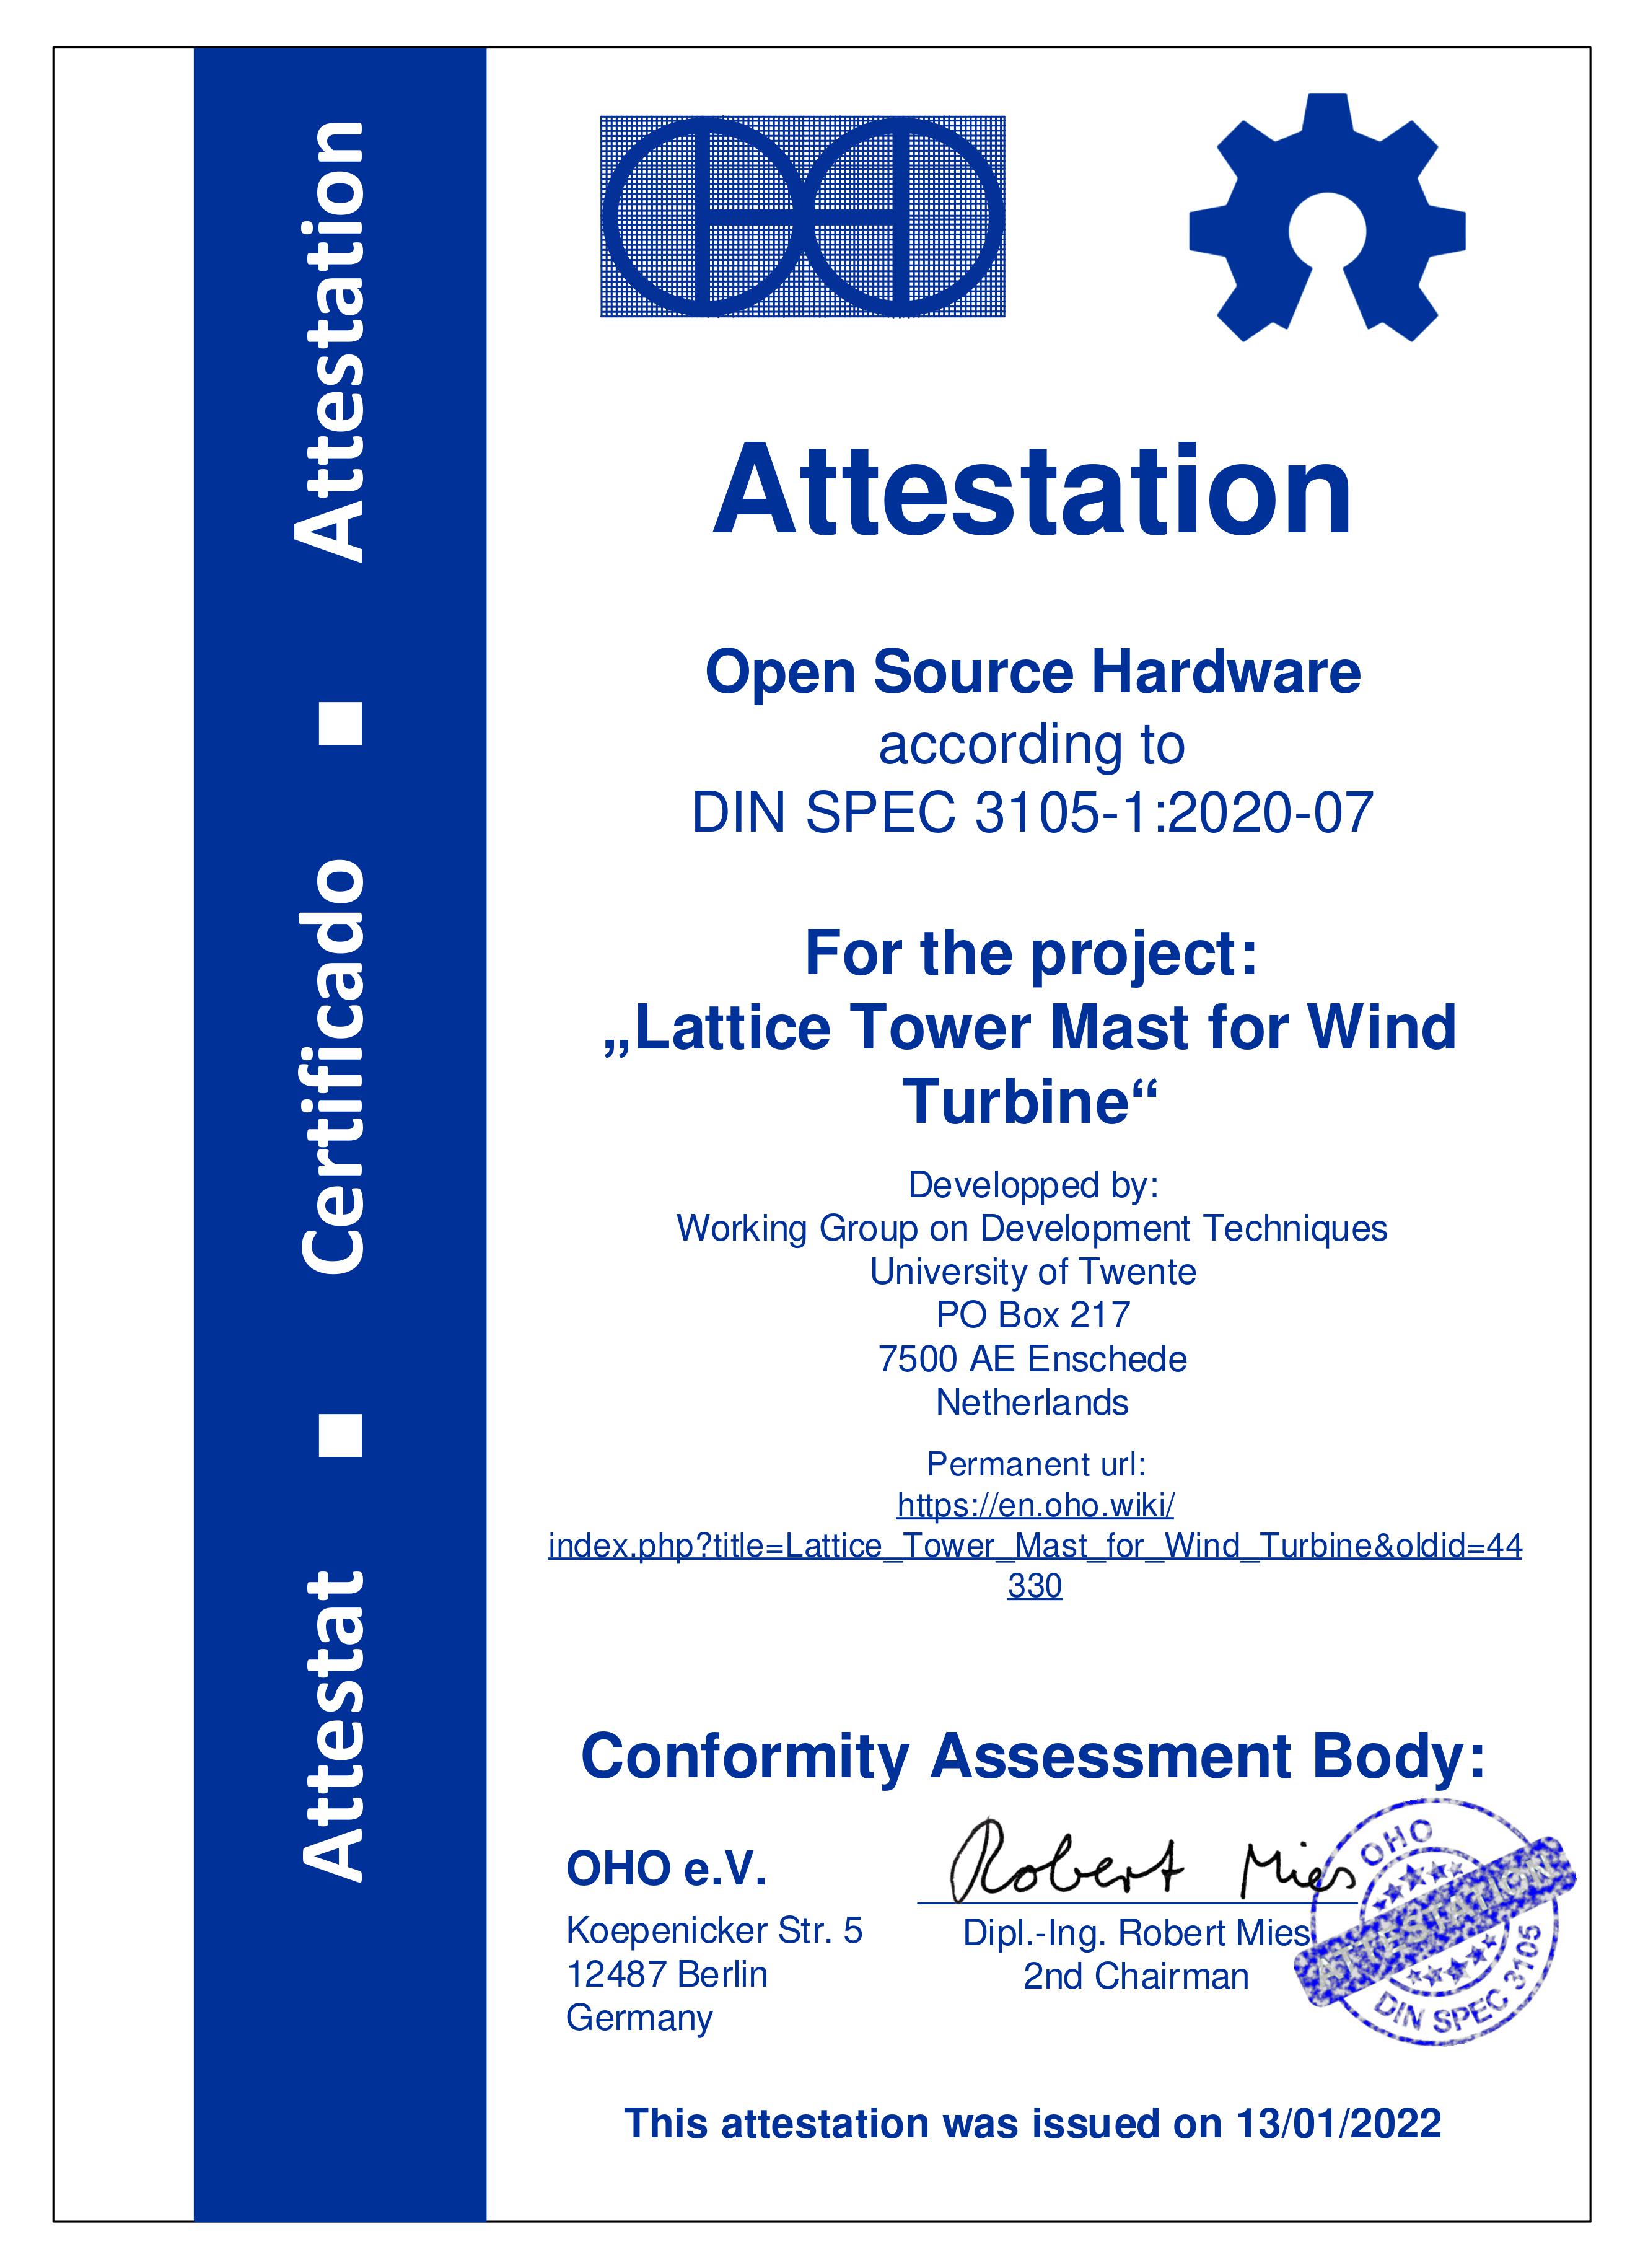 Attestation Lattice Tower Mast for Wind Turbine.jpg